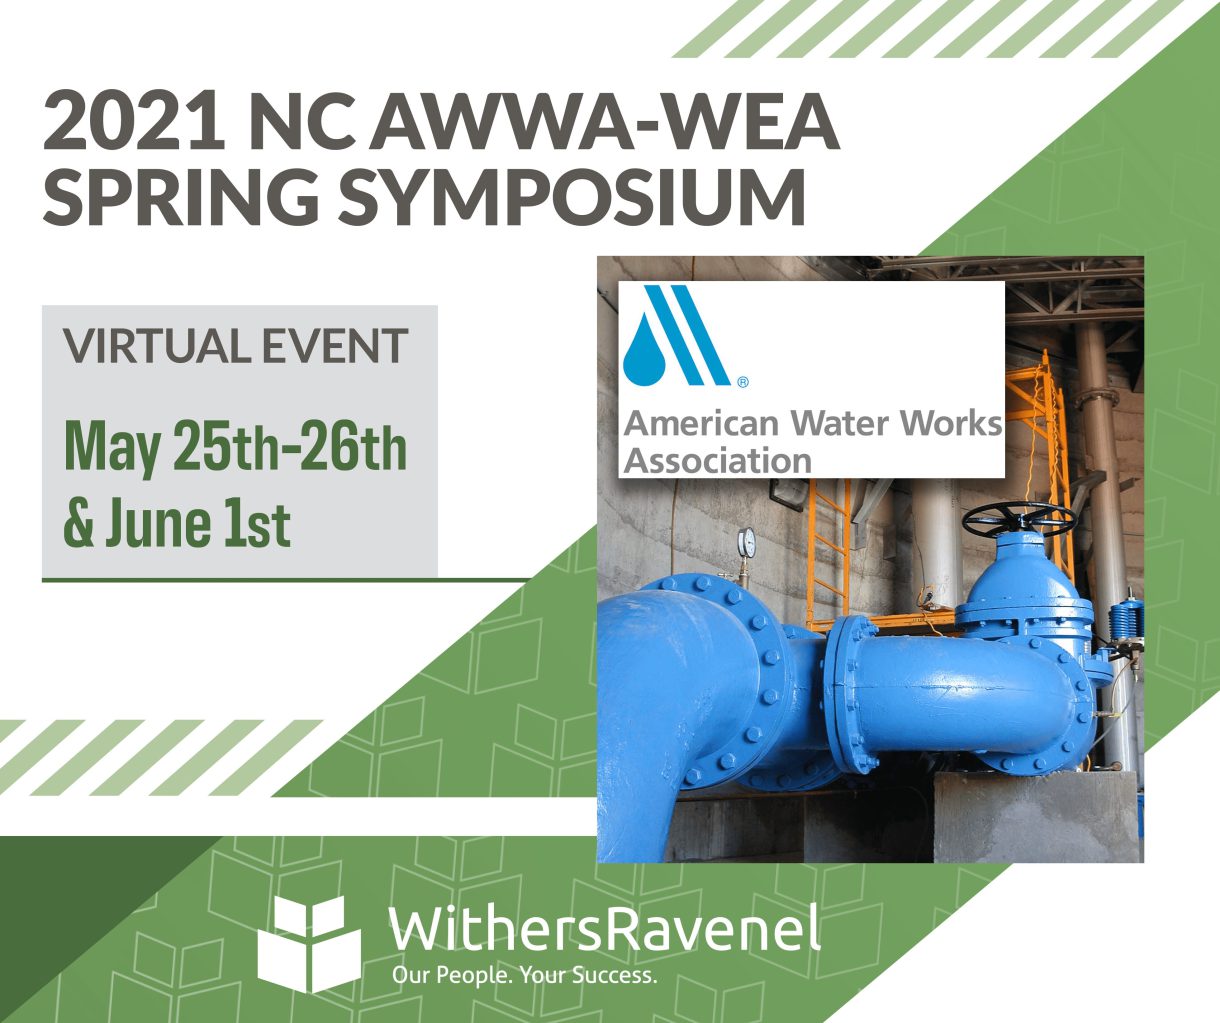 2021 NC AWWA-WEA Spring Symposium details